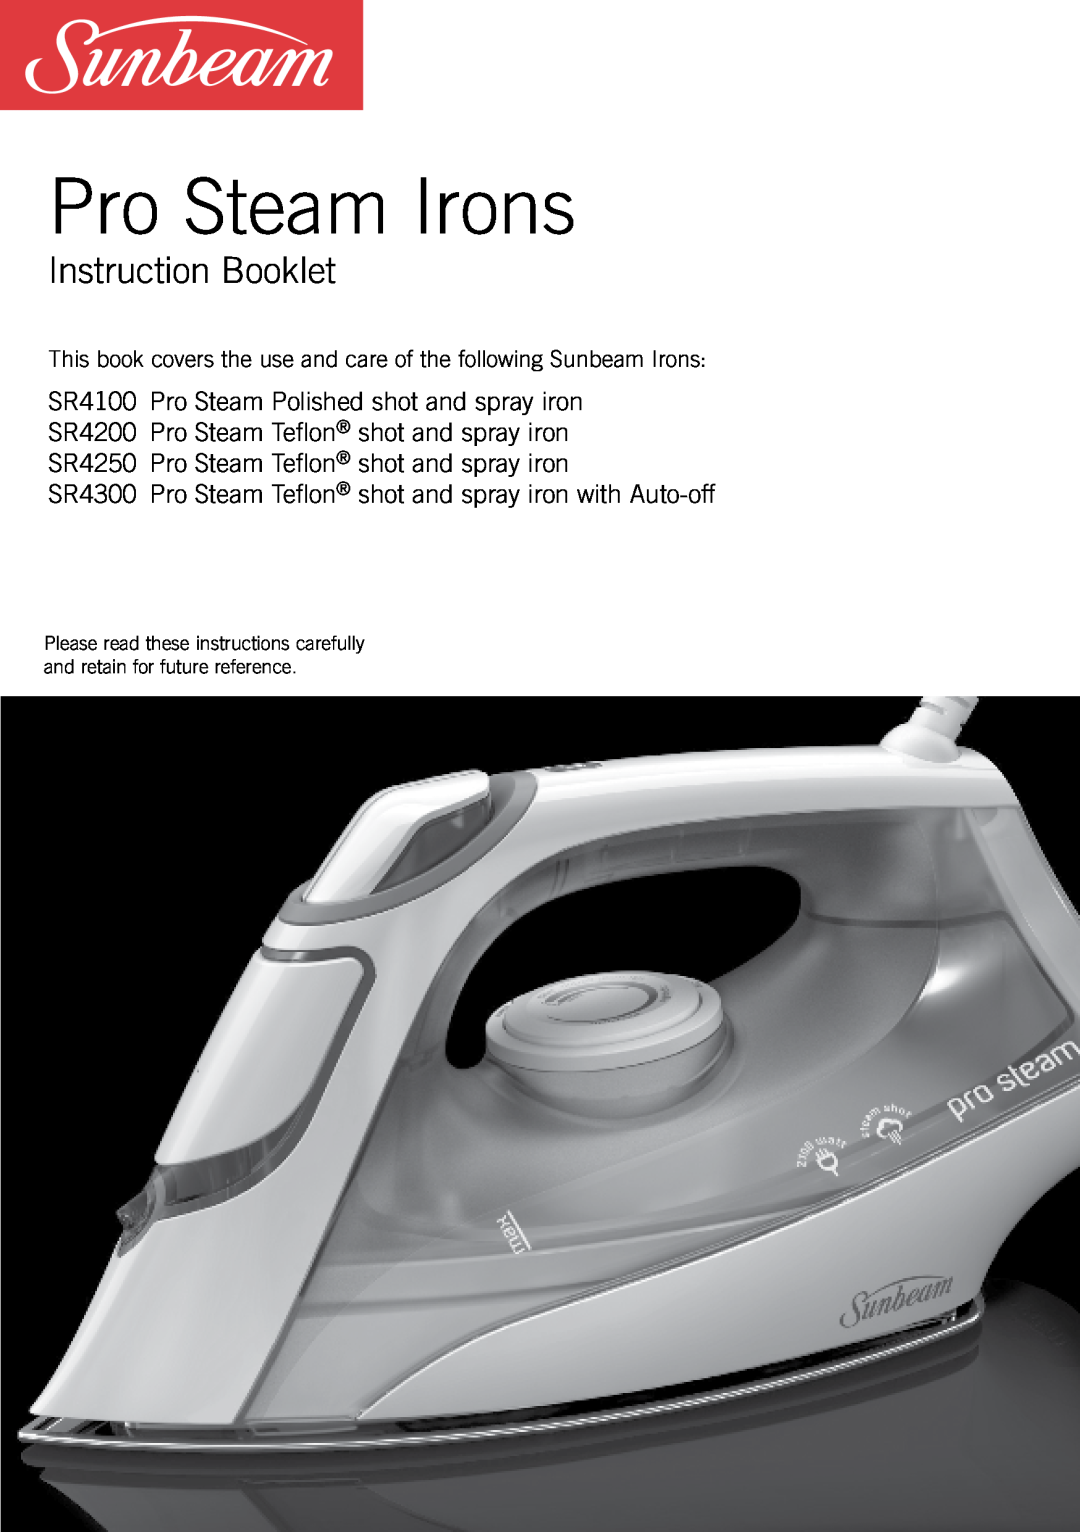 Sunbeam SR4100, SR4200, SR4300, SR4250 manual Pro Steam Irons, Instruction Booklet 